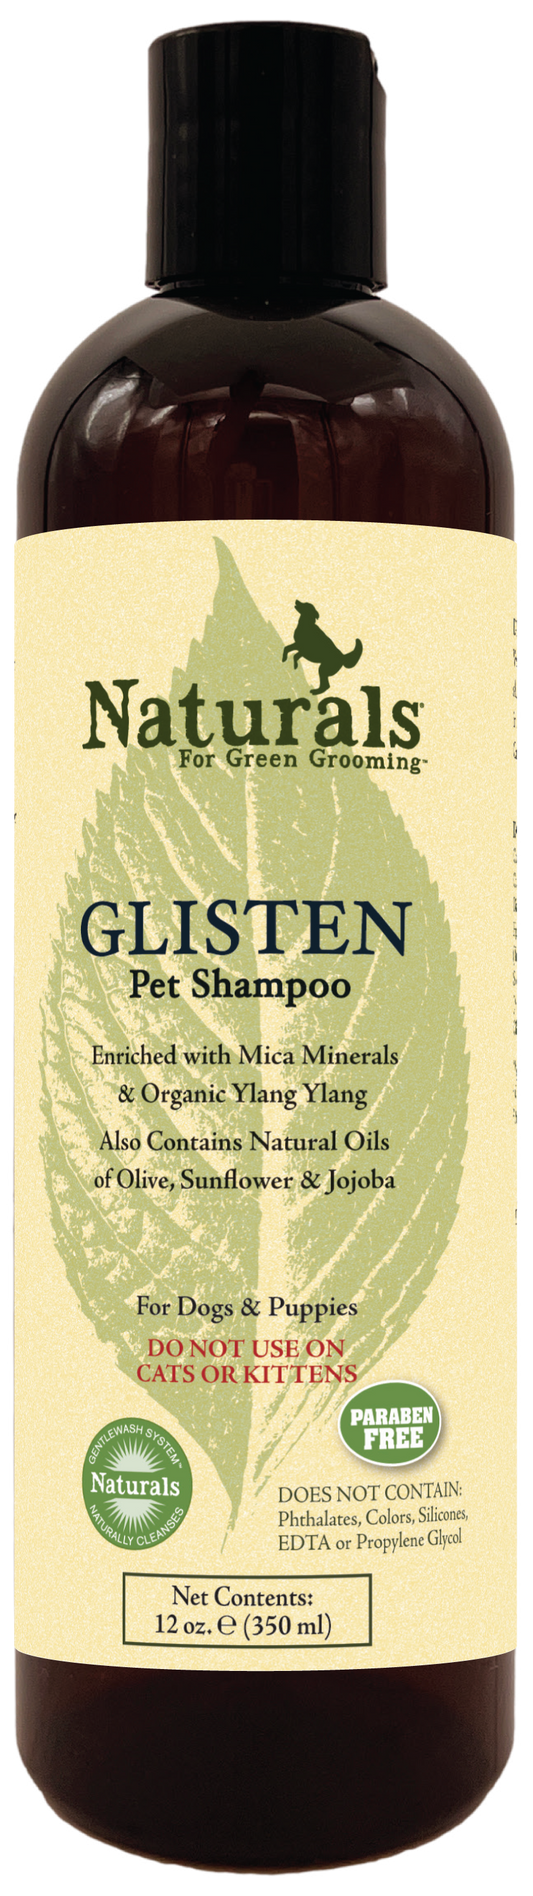 Glisten Pet Shampoo | Naturals™